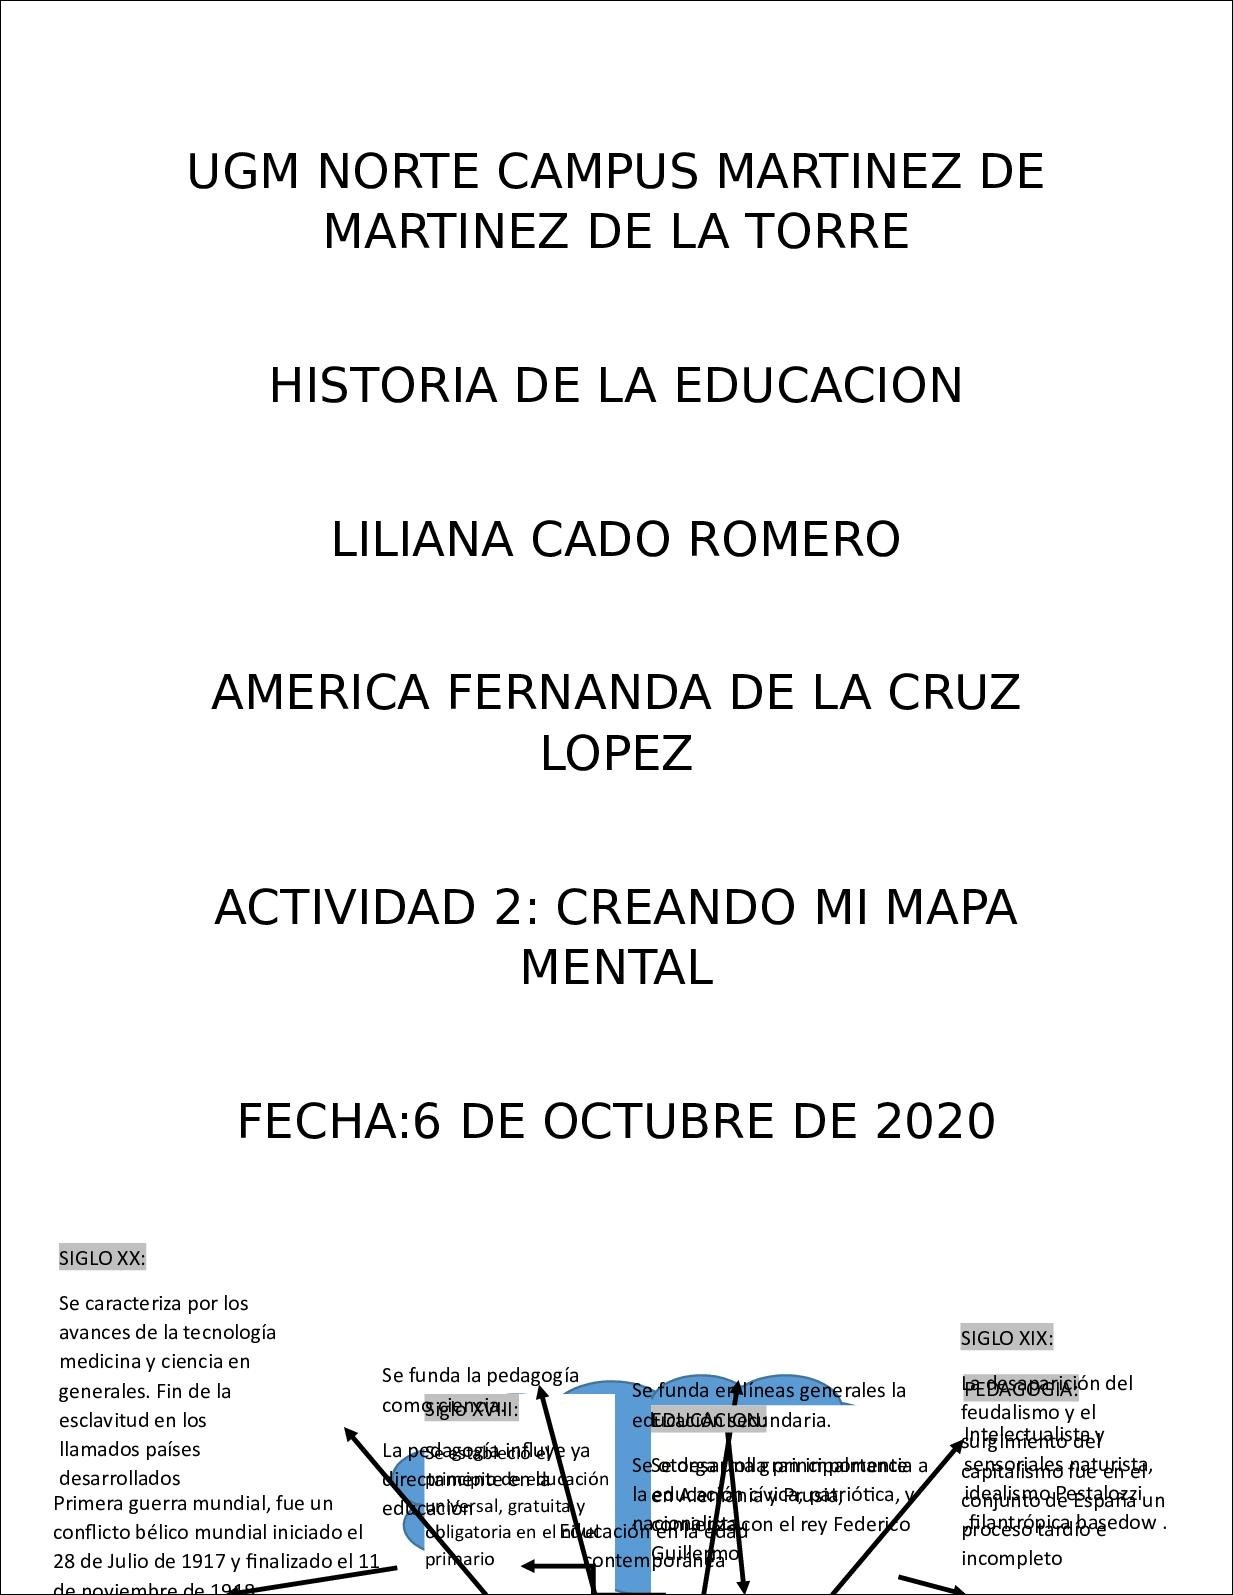 Mapa mental com UGM NORTE CAMPUS MARTINEZ DE no centro, ramificando-se para MARTINEZ DE LA TORRE e HISTORIA DE LA EDUCACION